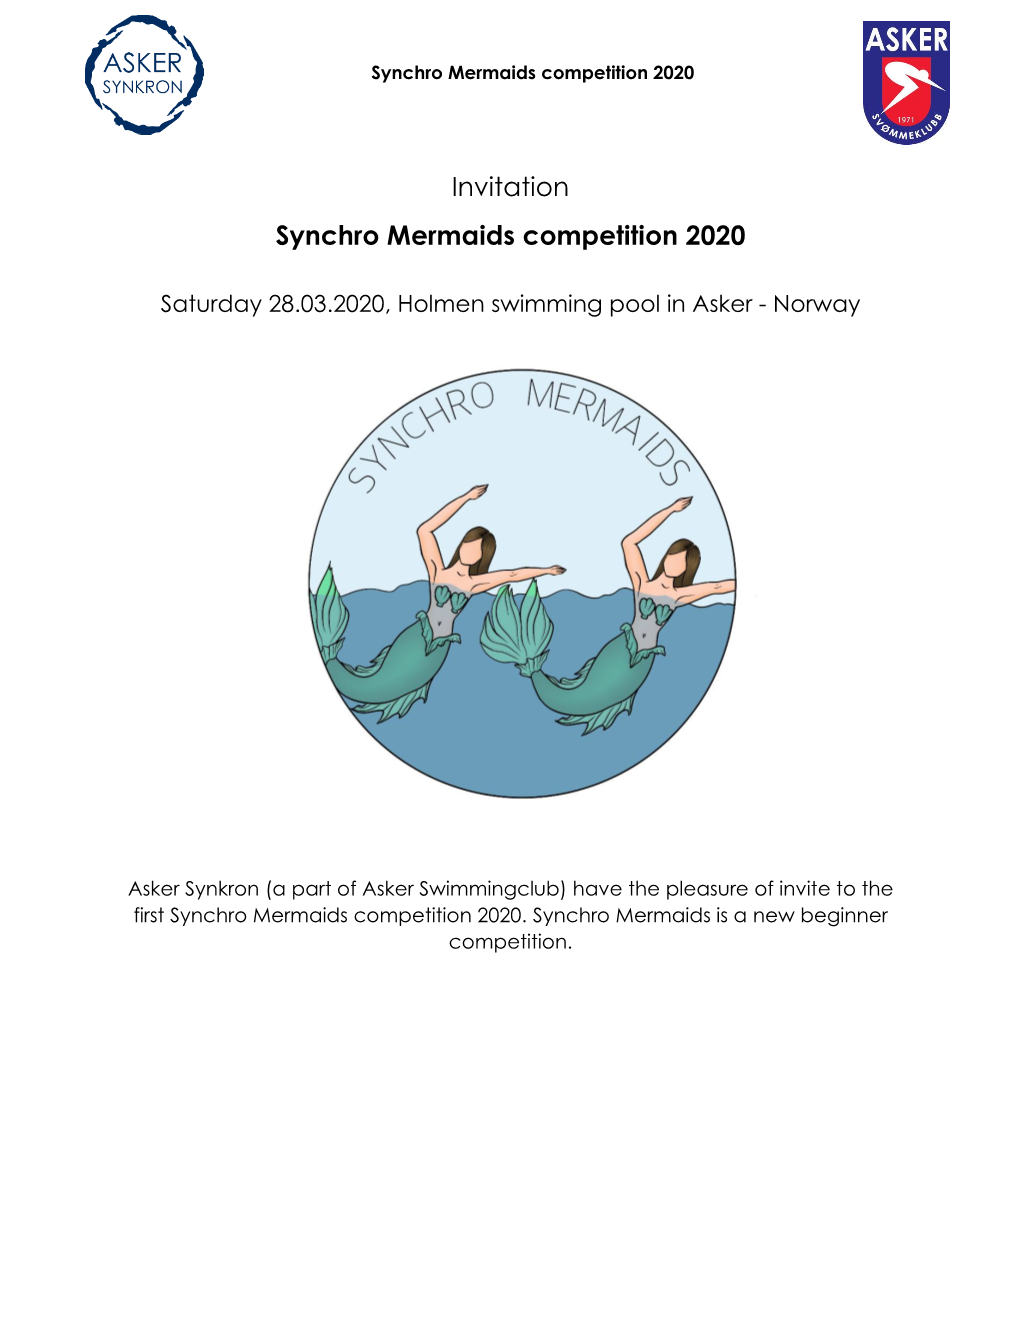 Invitation Synchro Mermaids Competition 2020